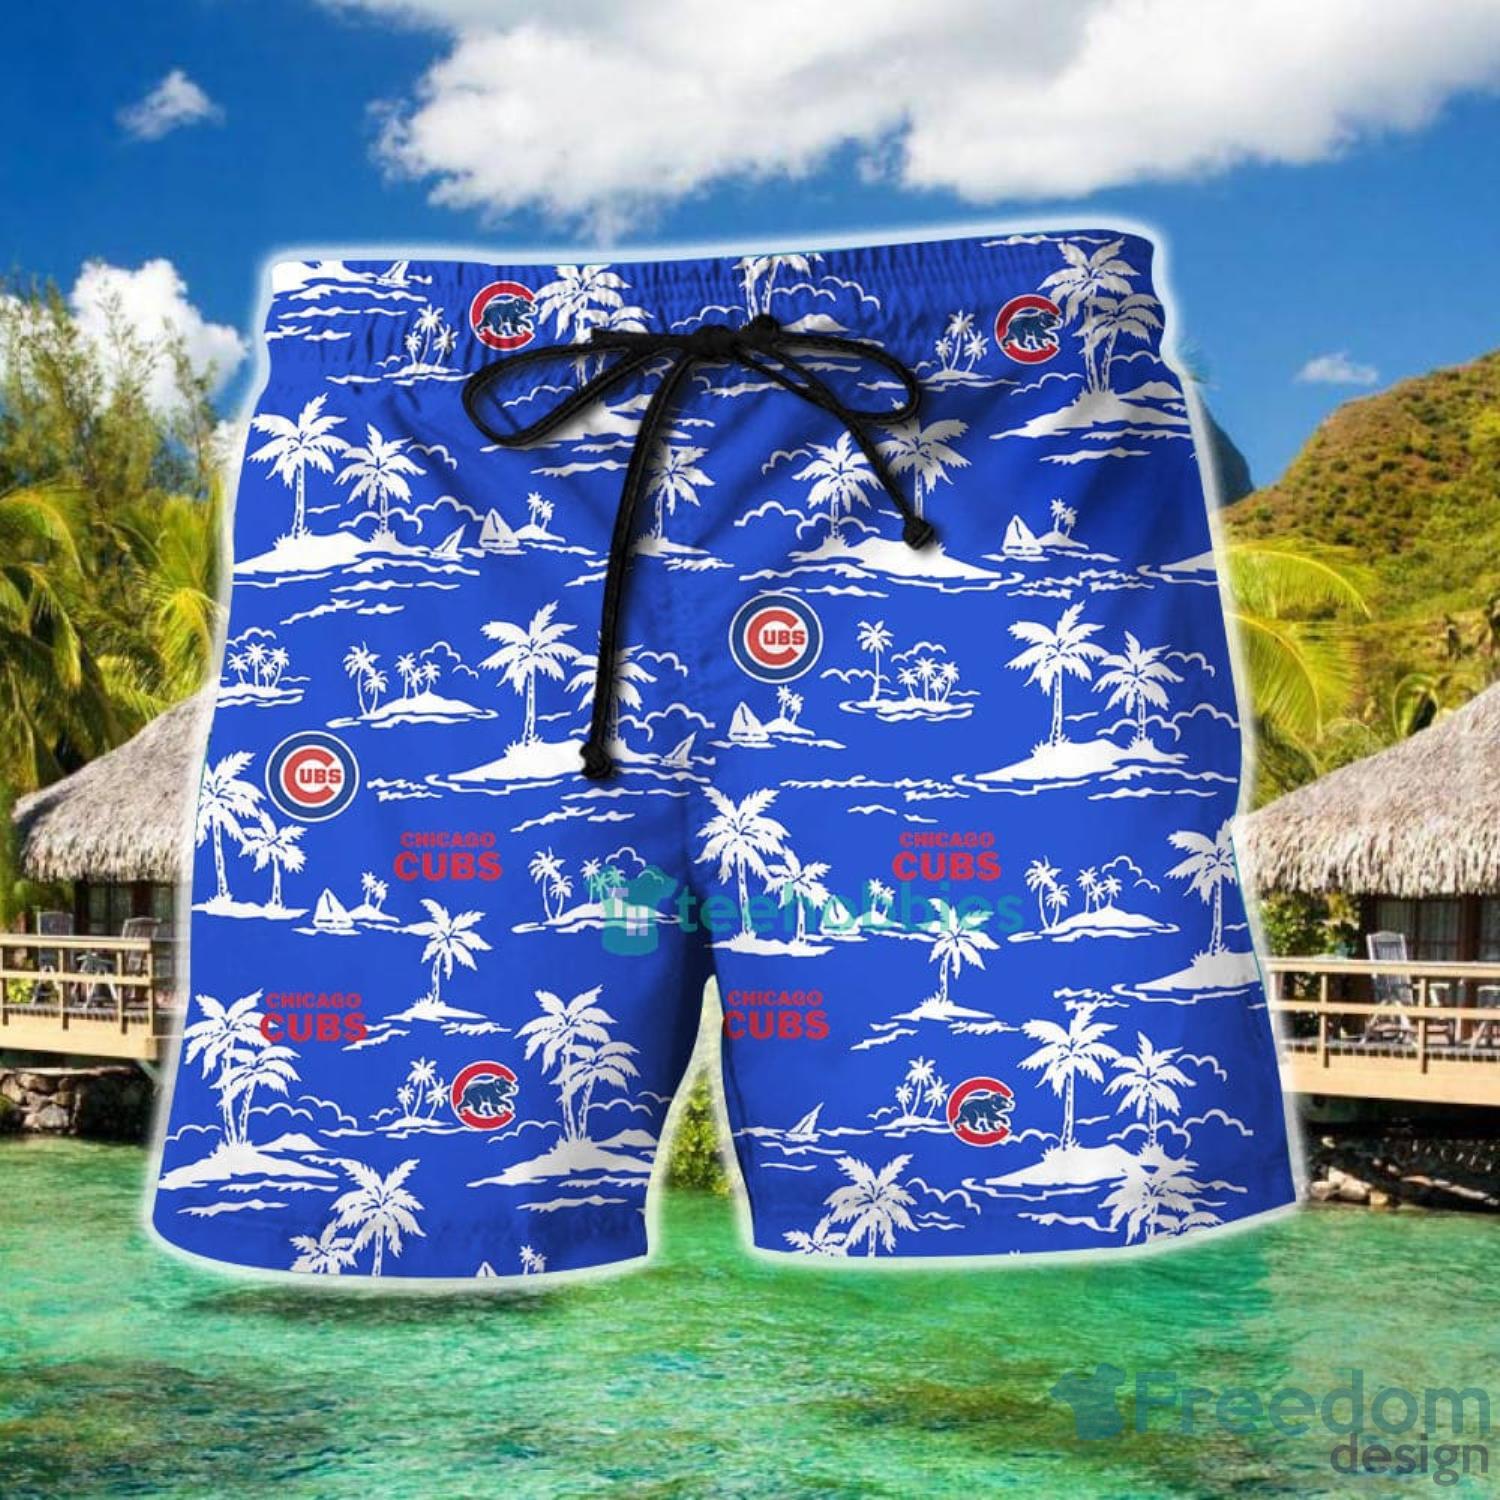 Chicago Cubs Goofy Hawaiian Shirt and Shorts